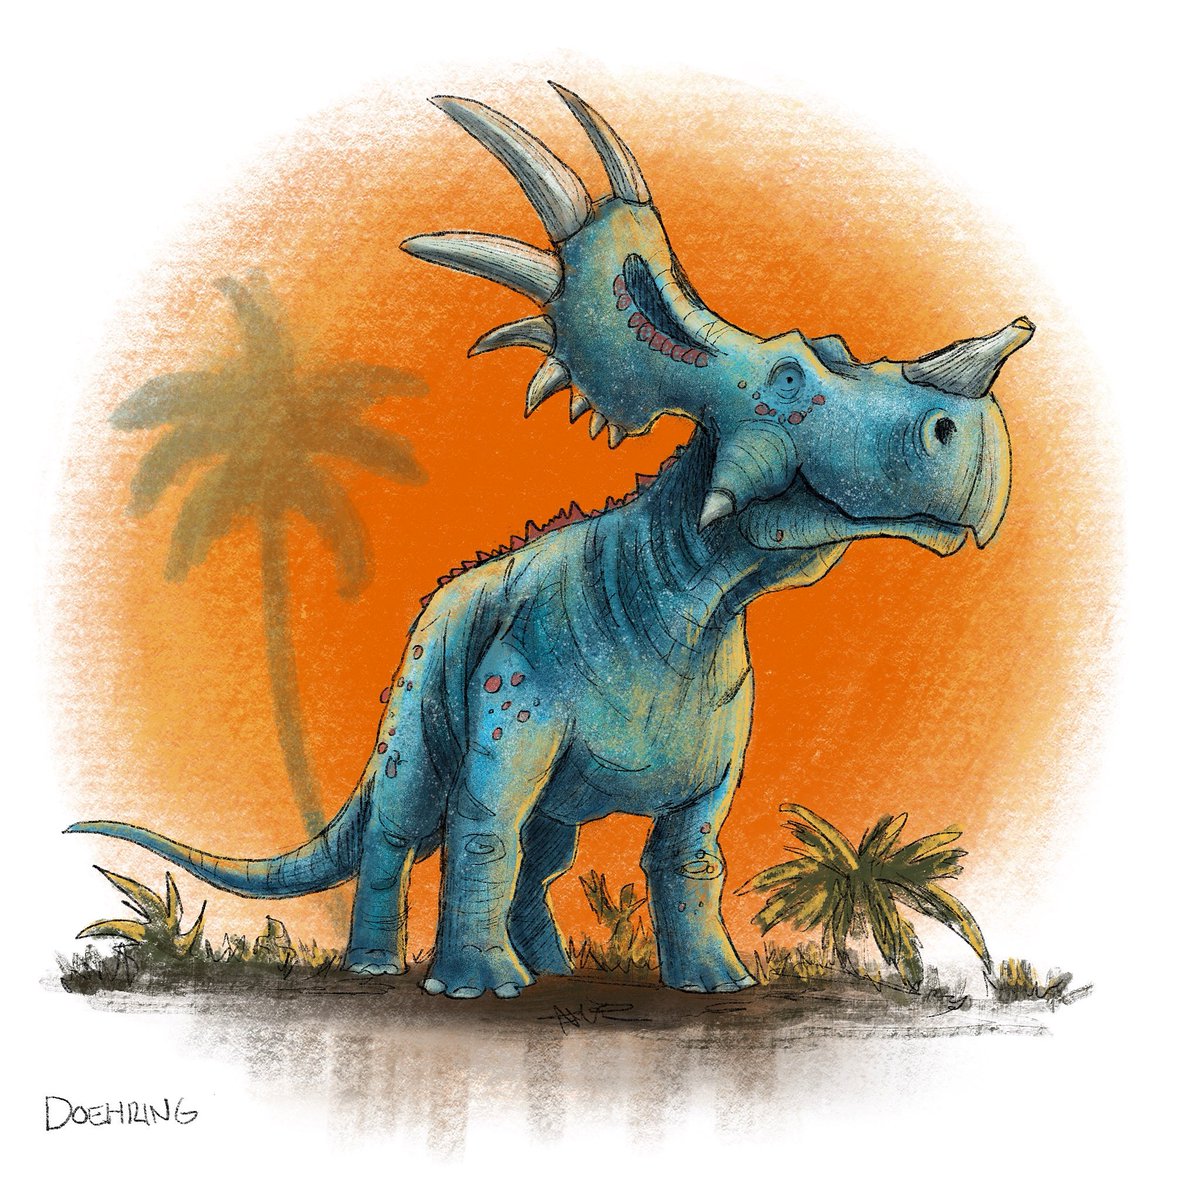 Just a triceratops enjoying his sunset. 

#kiditart #dinosaur #illustration #ArtistOnTwitter #picturebookartist